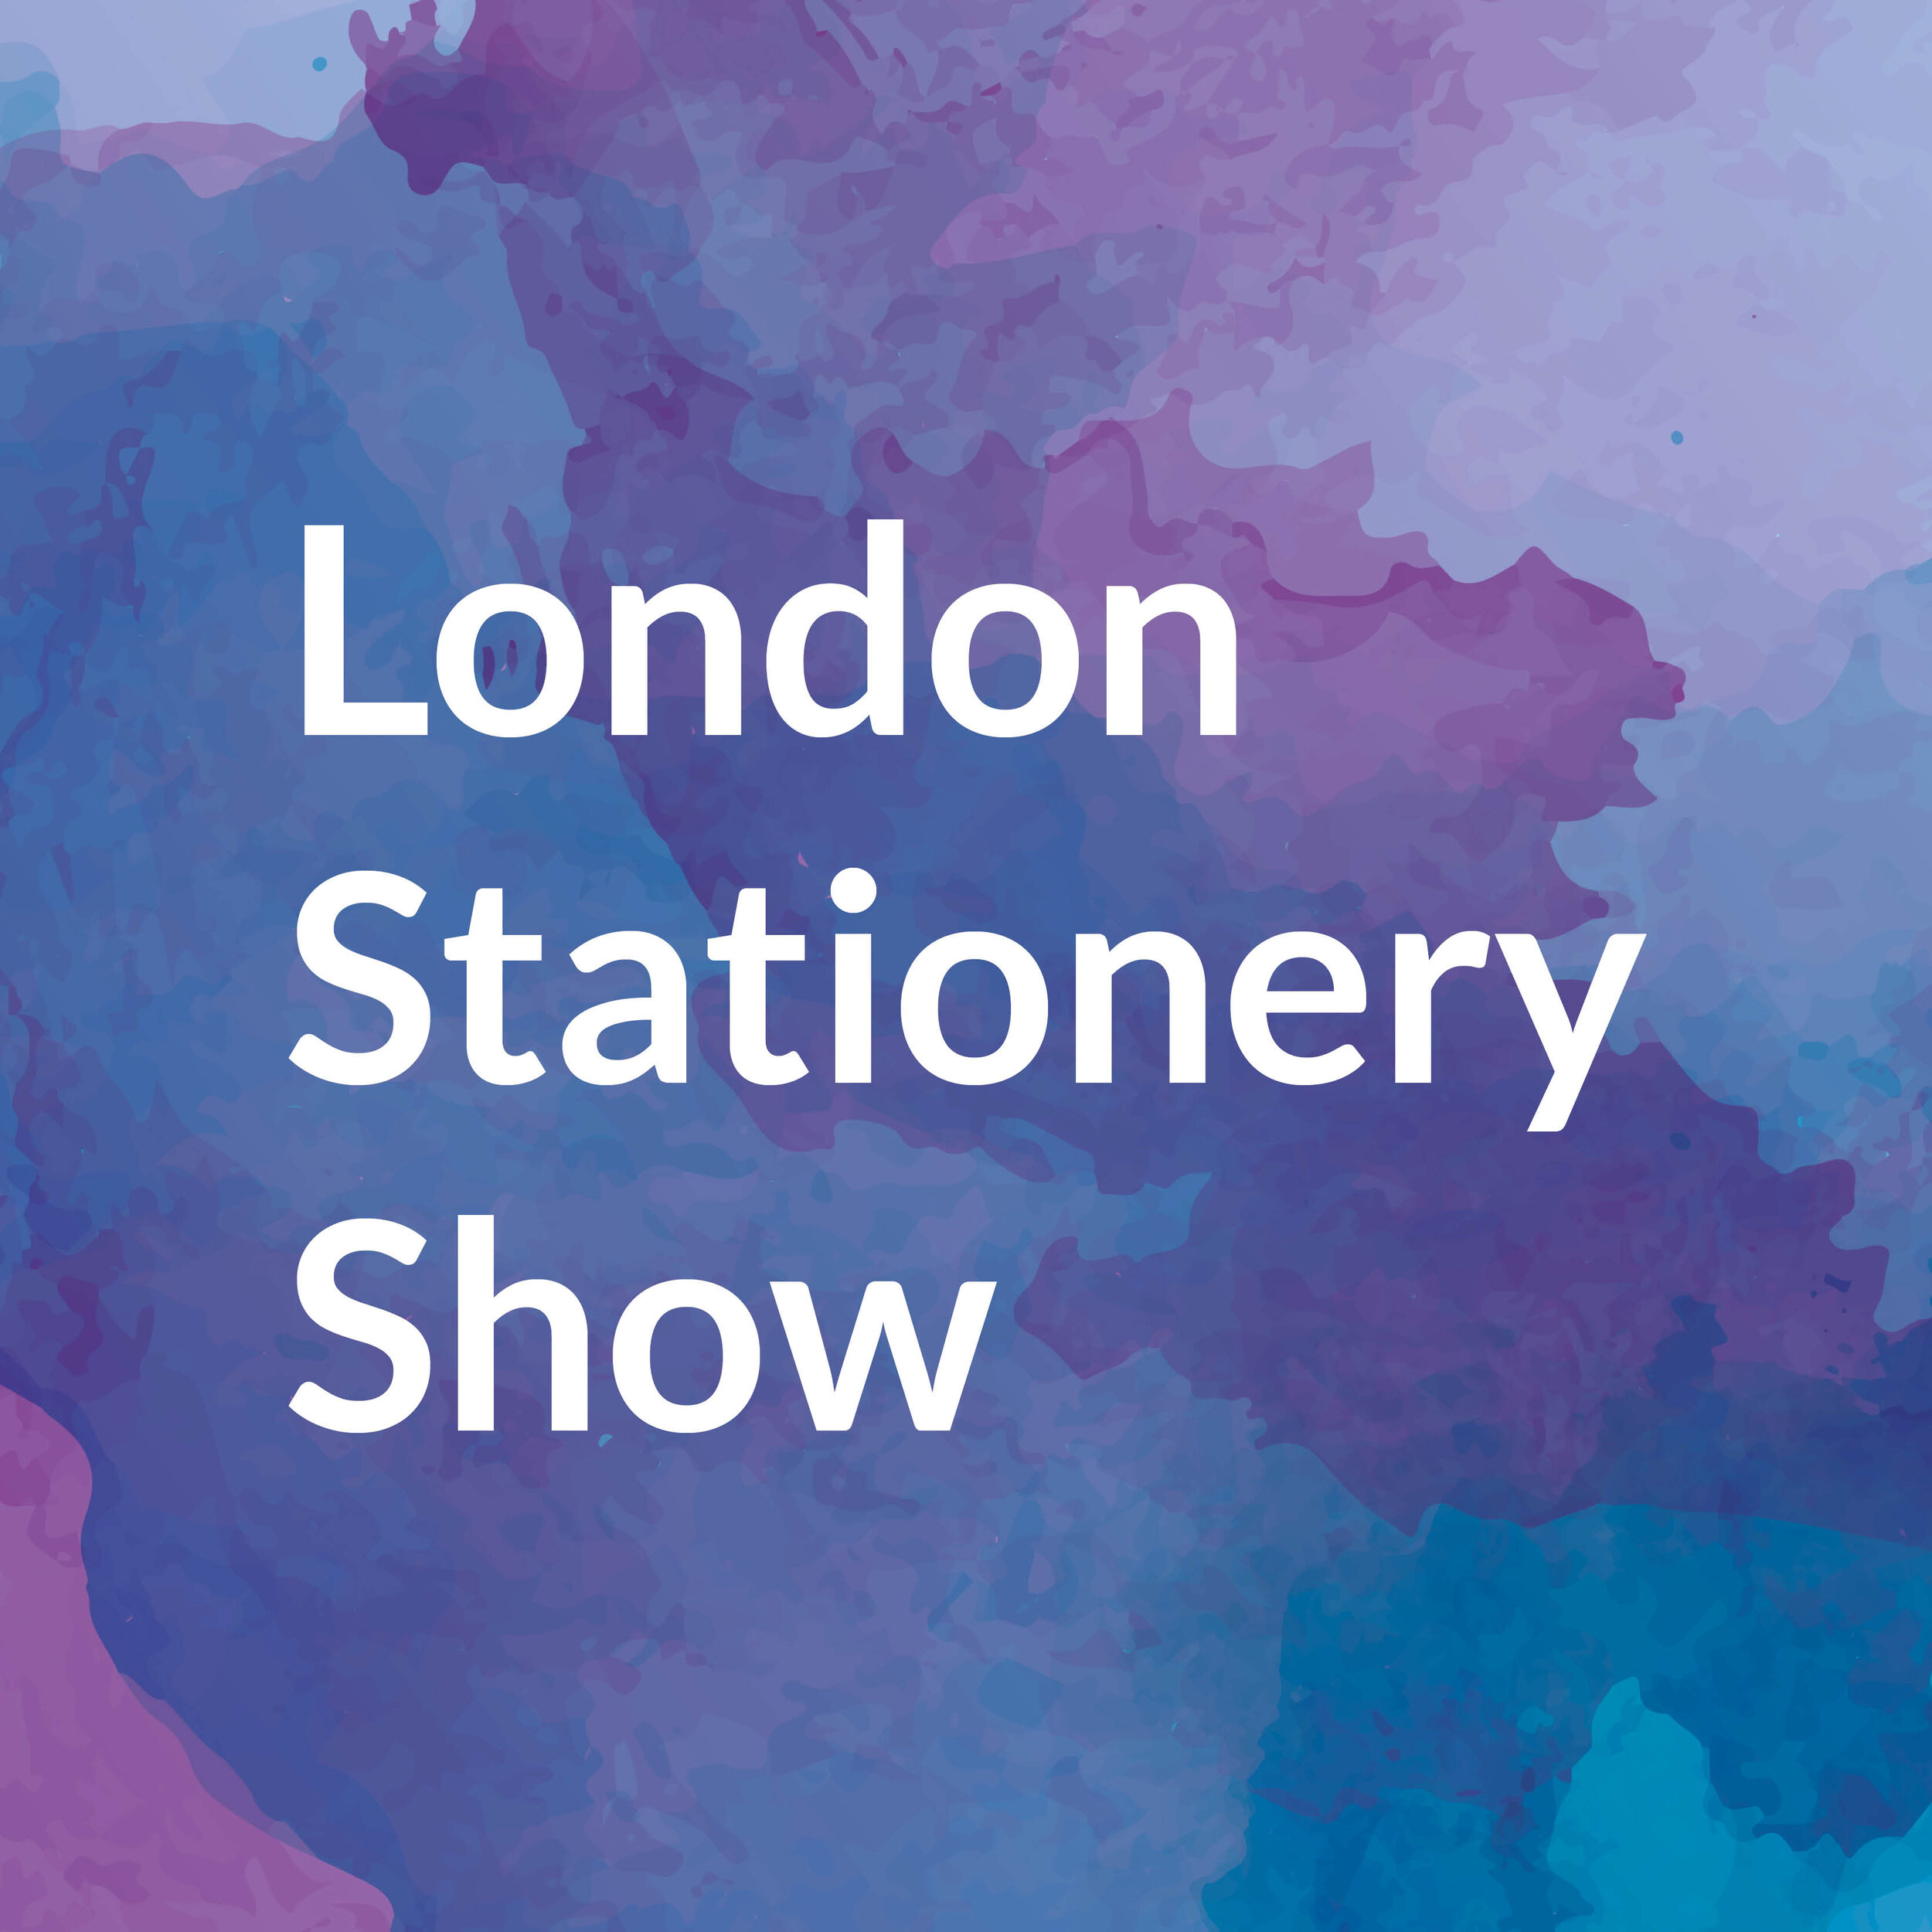 London Stationery Show-Graphic.jpg